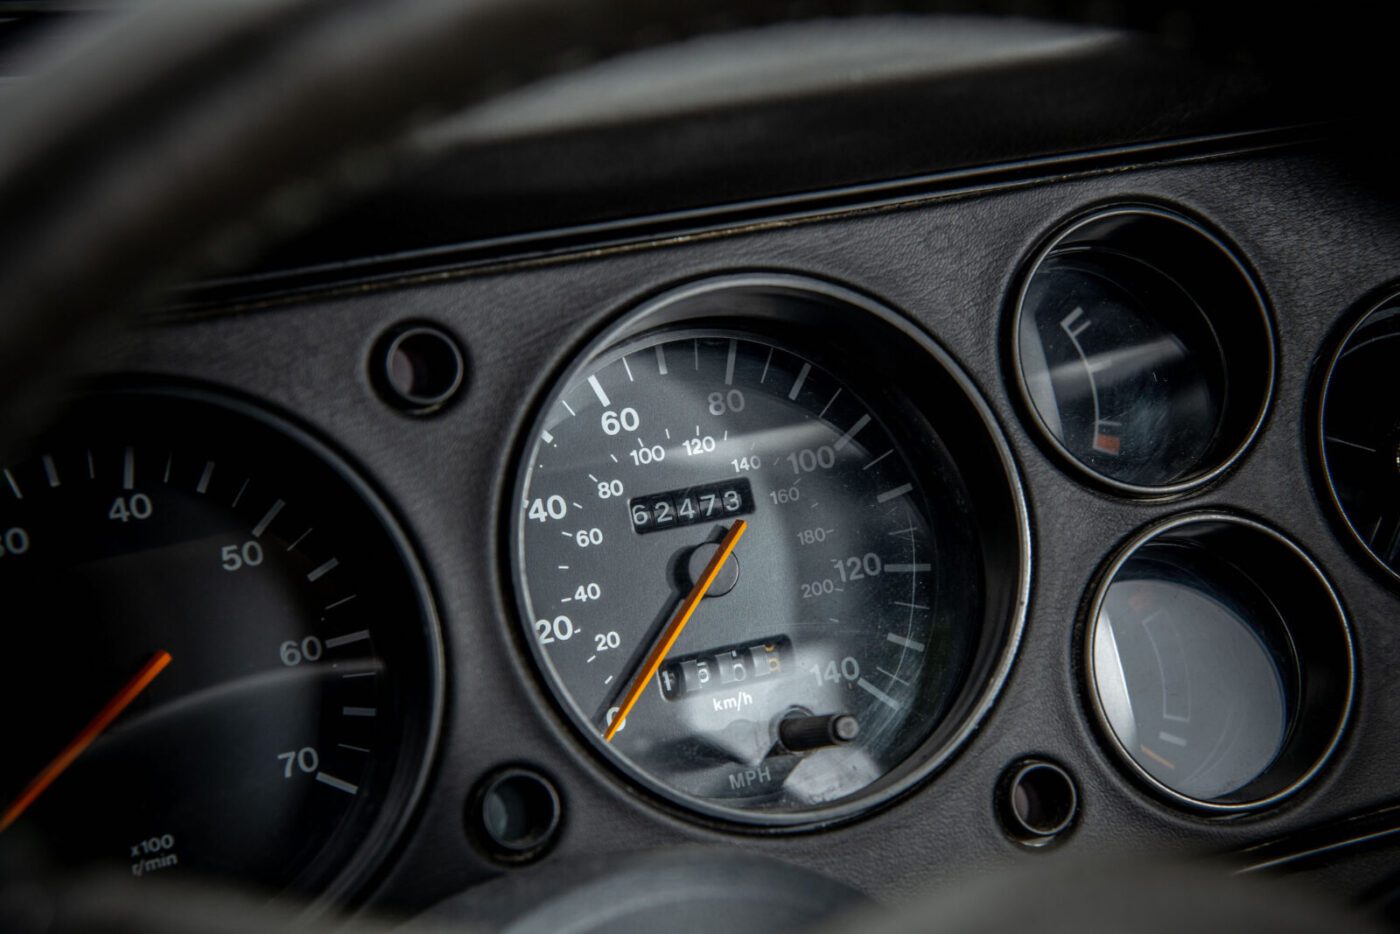 Ford Capri Laser speedometer